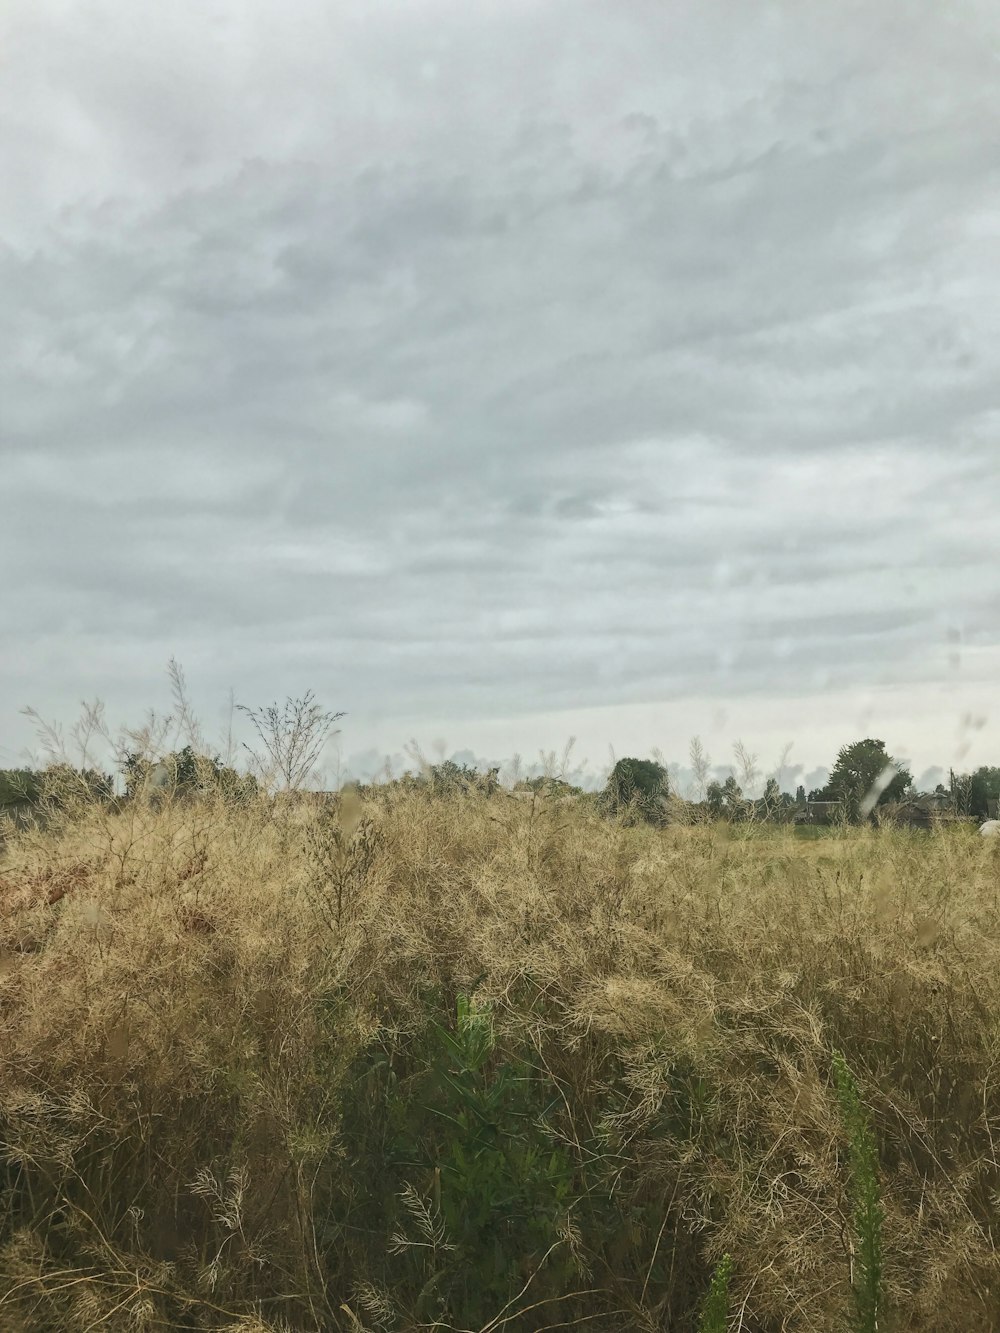 a field of tall dry grass under a cloudy sky